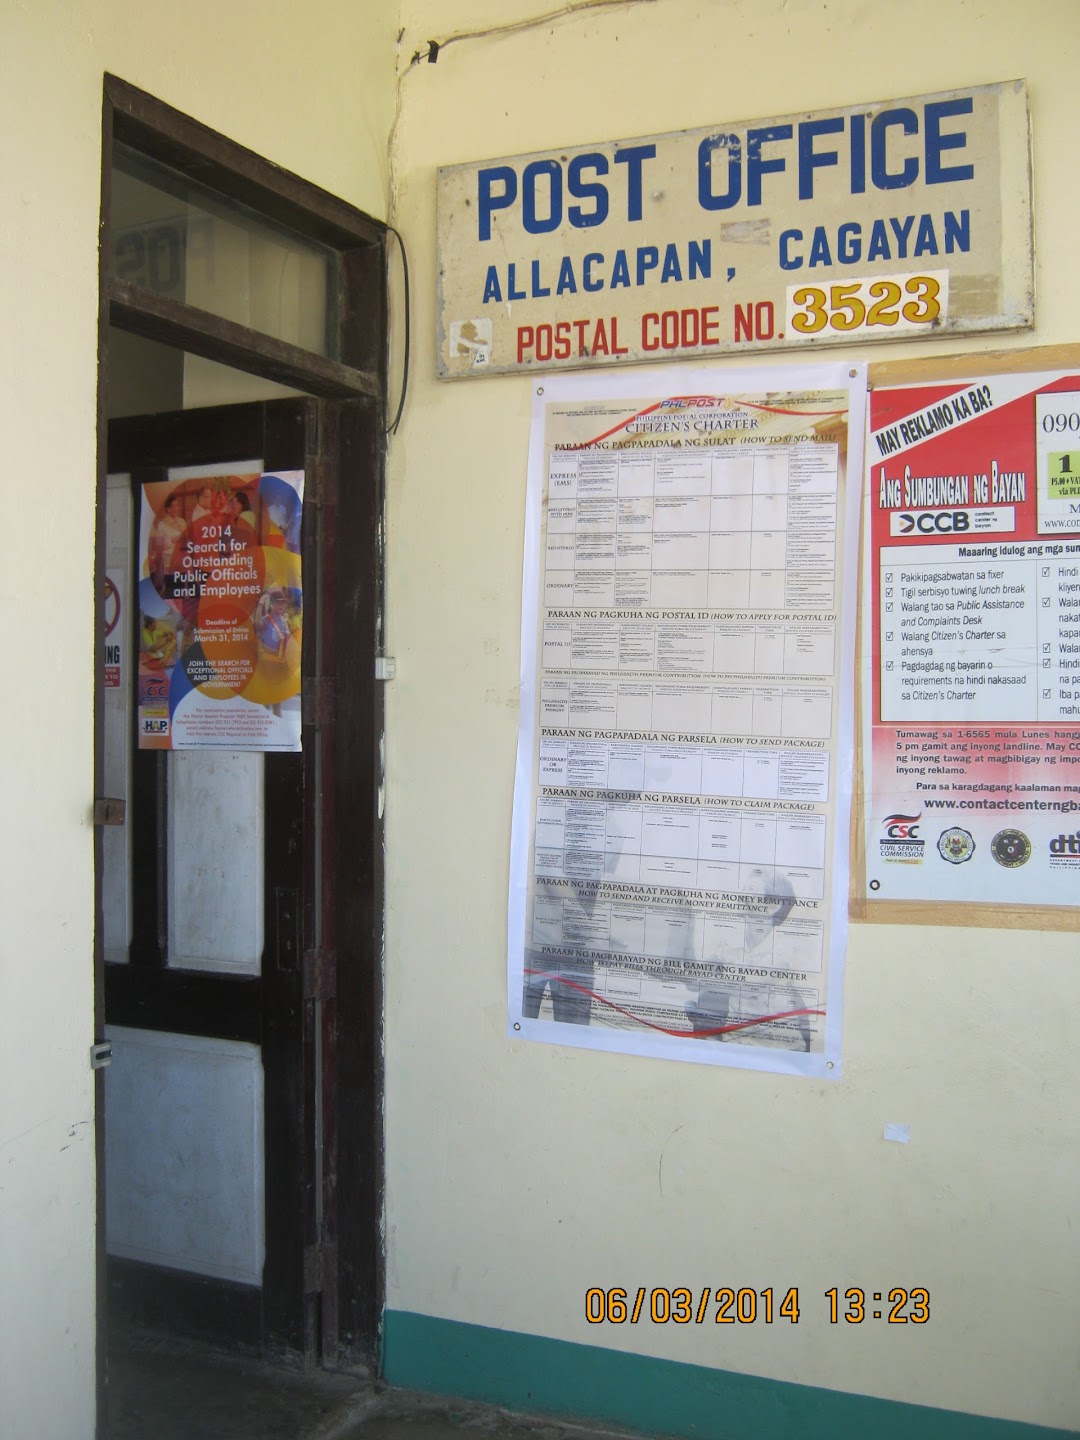 Allacapan Post Office